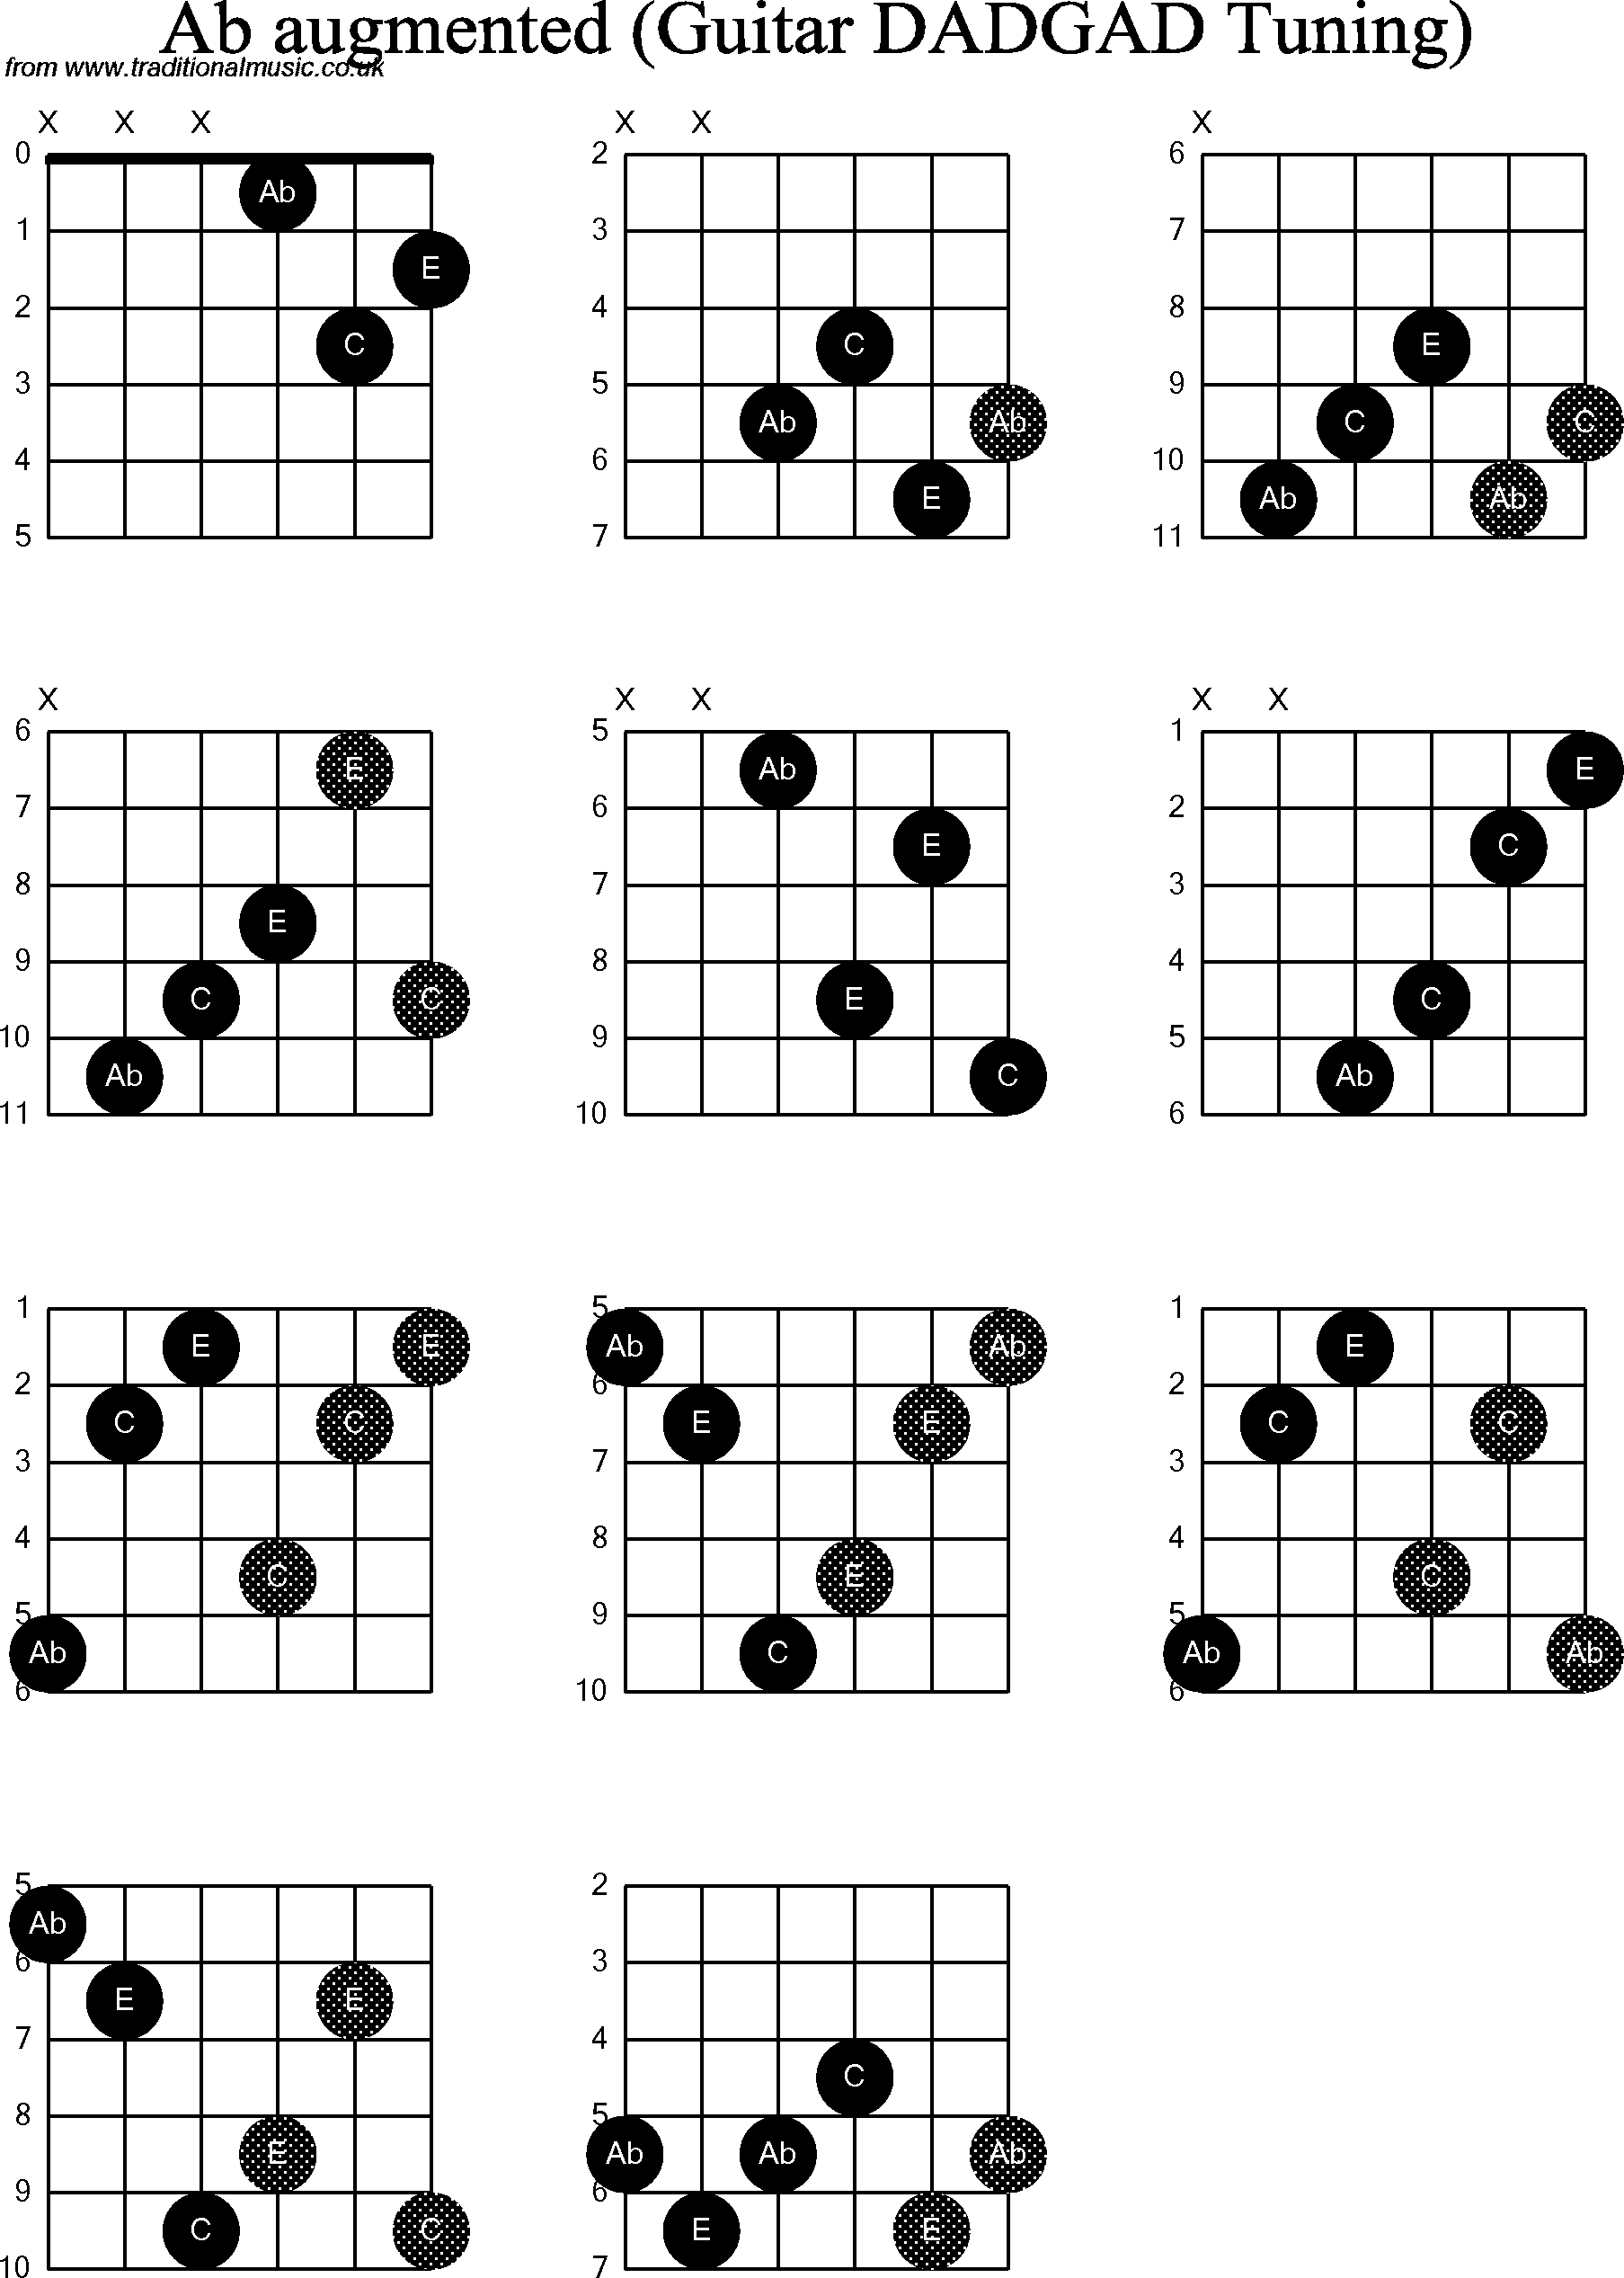 Chord Diagrams for D Modal Guitar(DADGAD), Ab Augmented